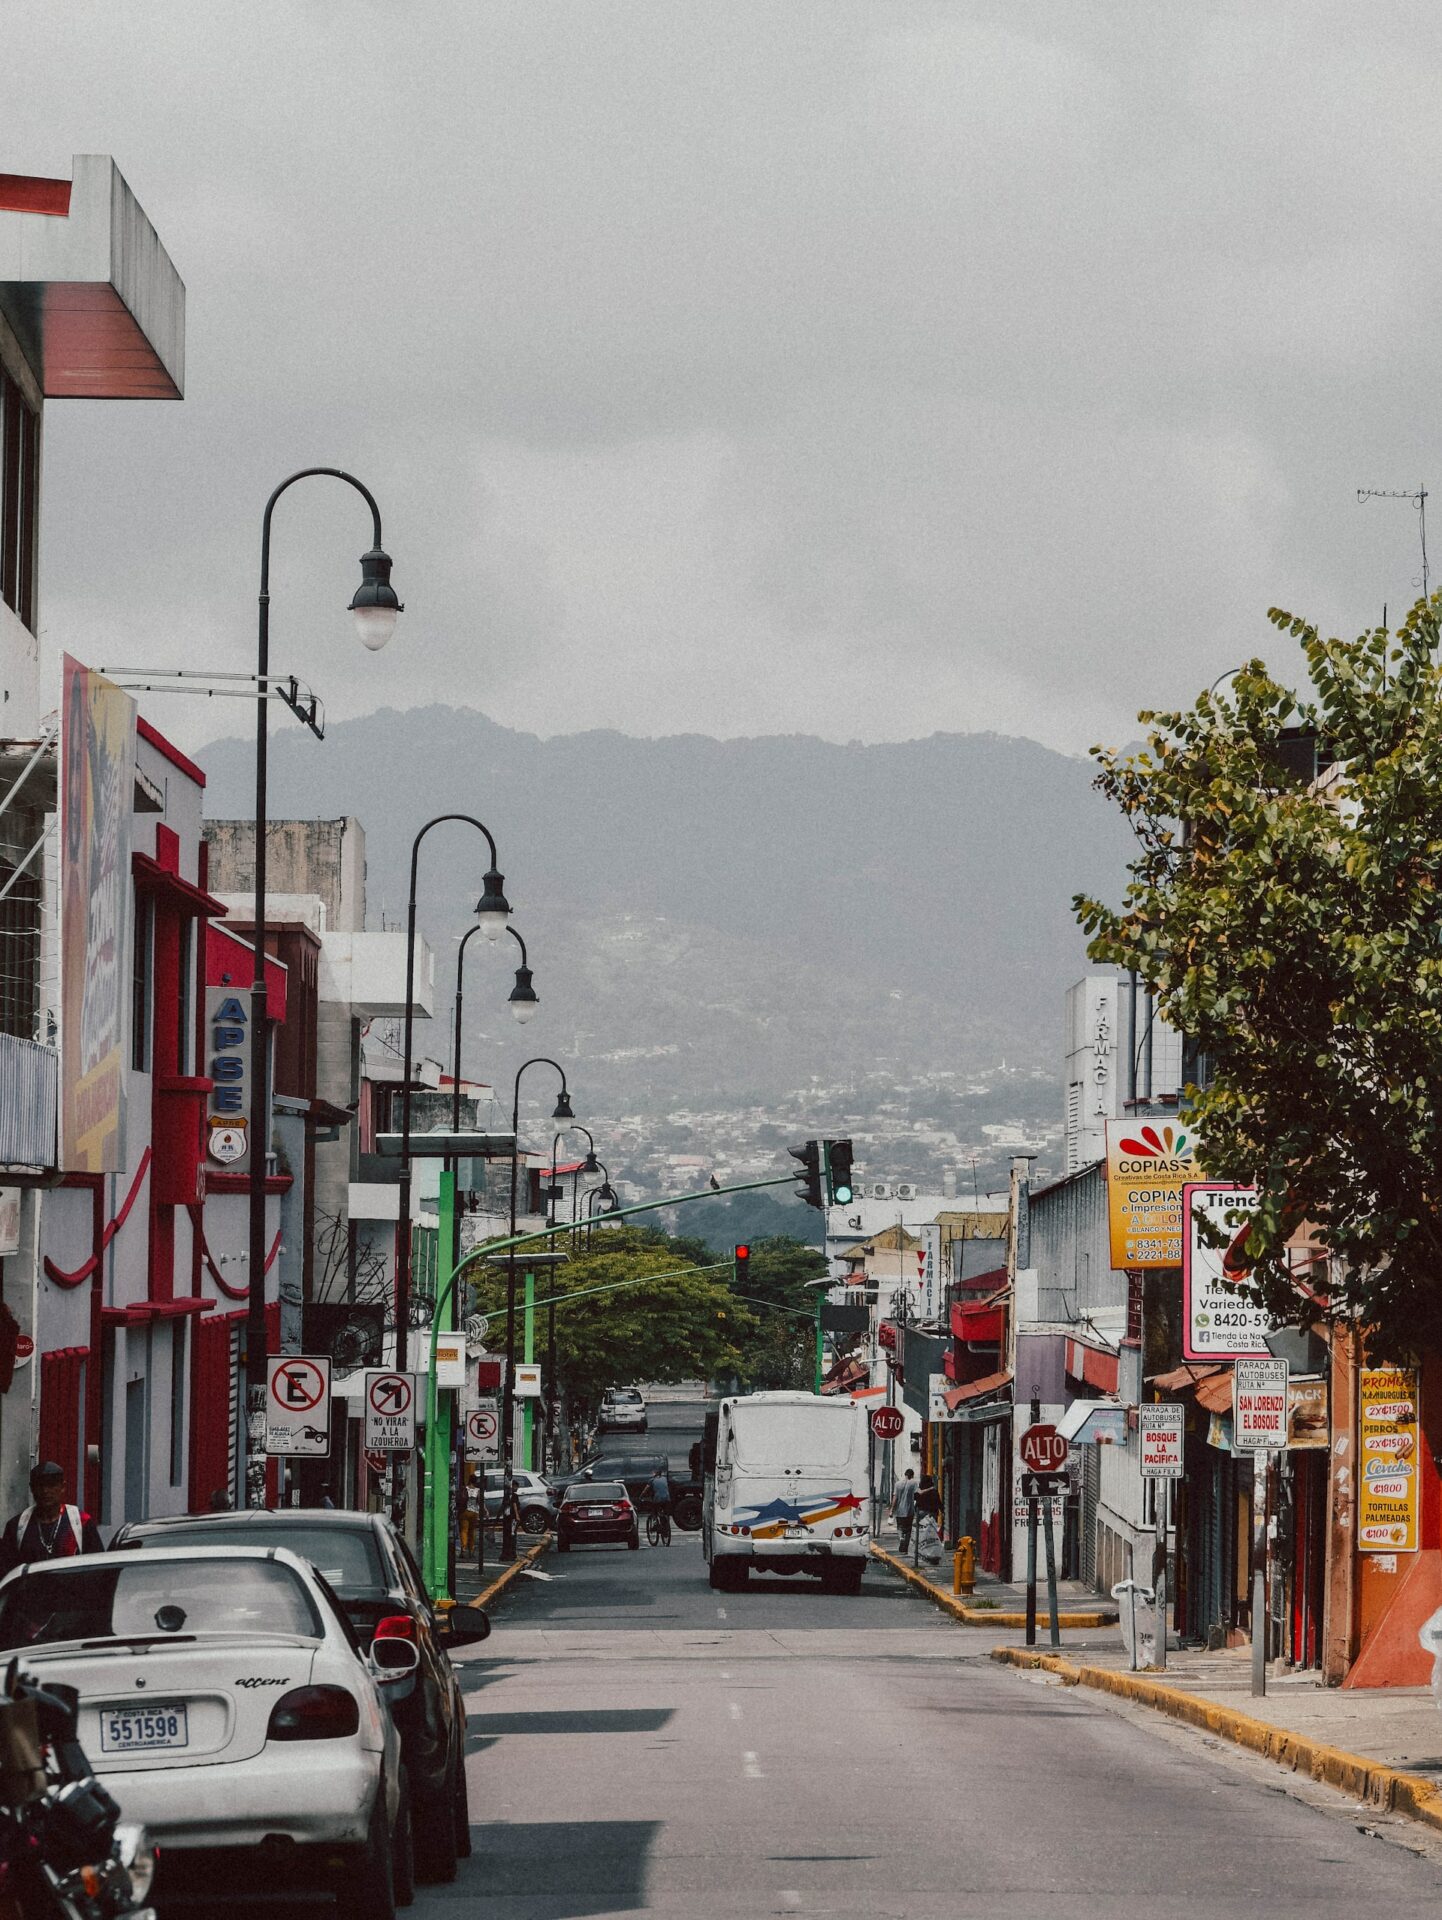 streets of San Jose, Costa Rica